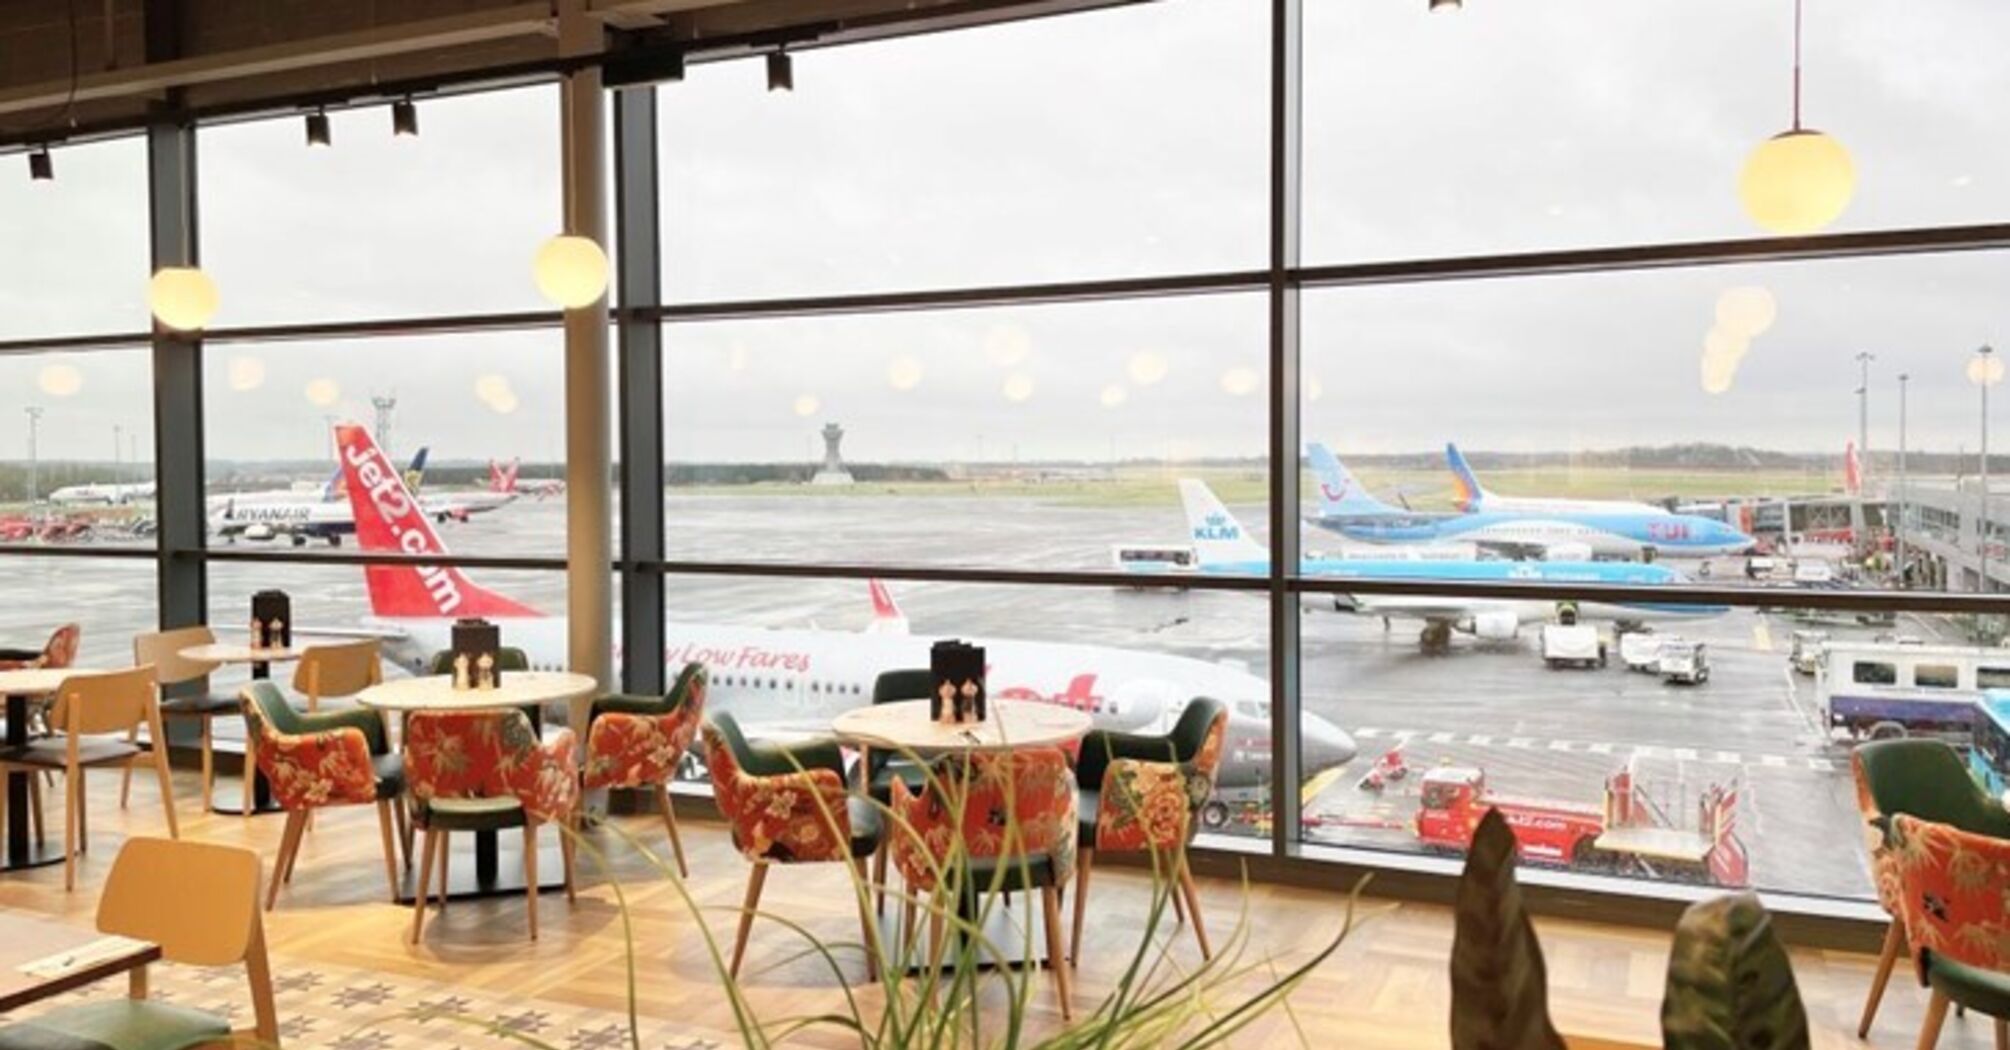 Newcastle Airport opens new premium restaurant